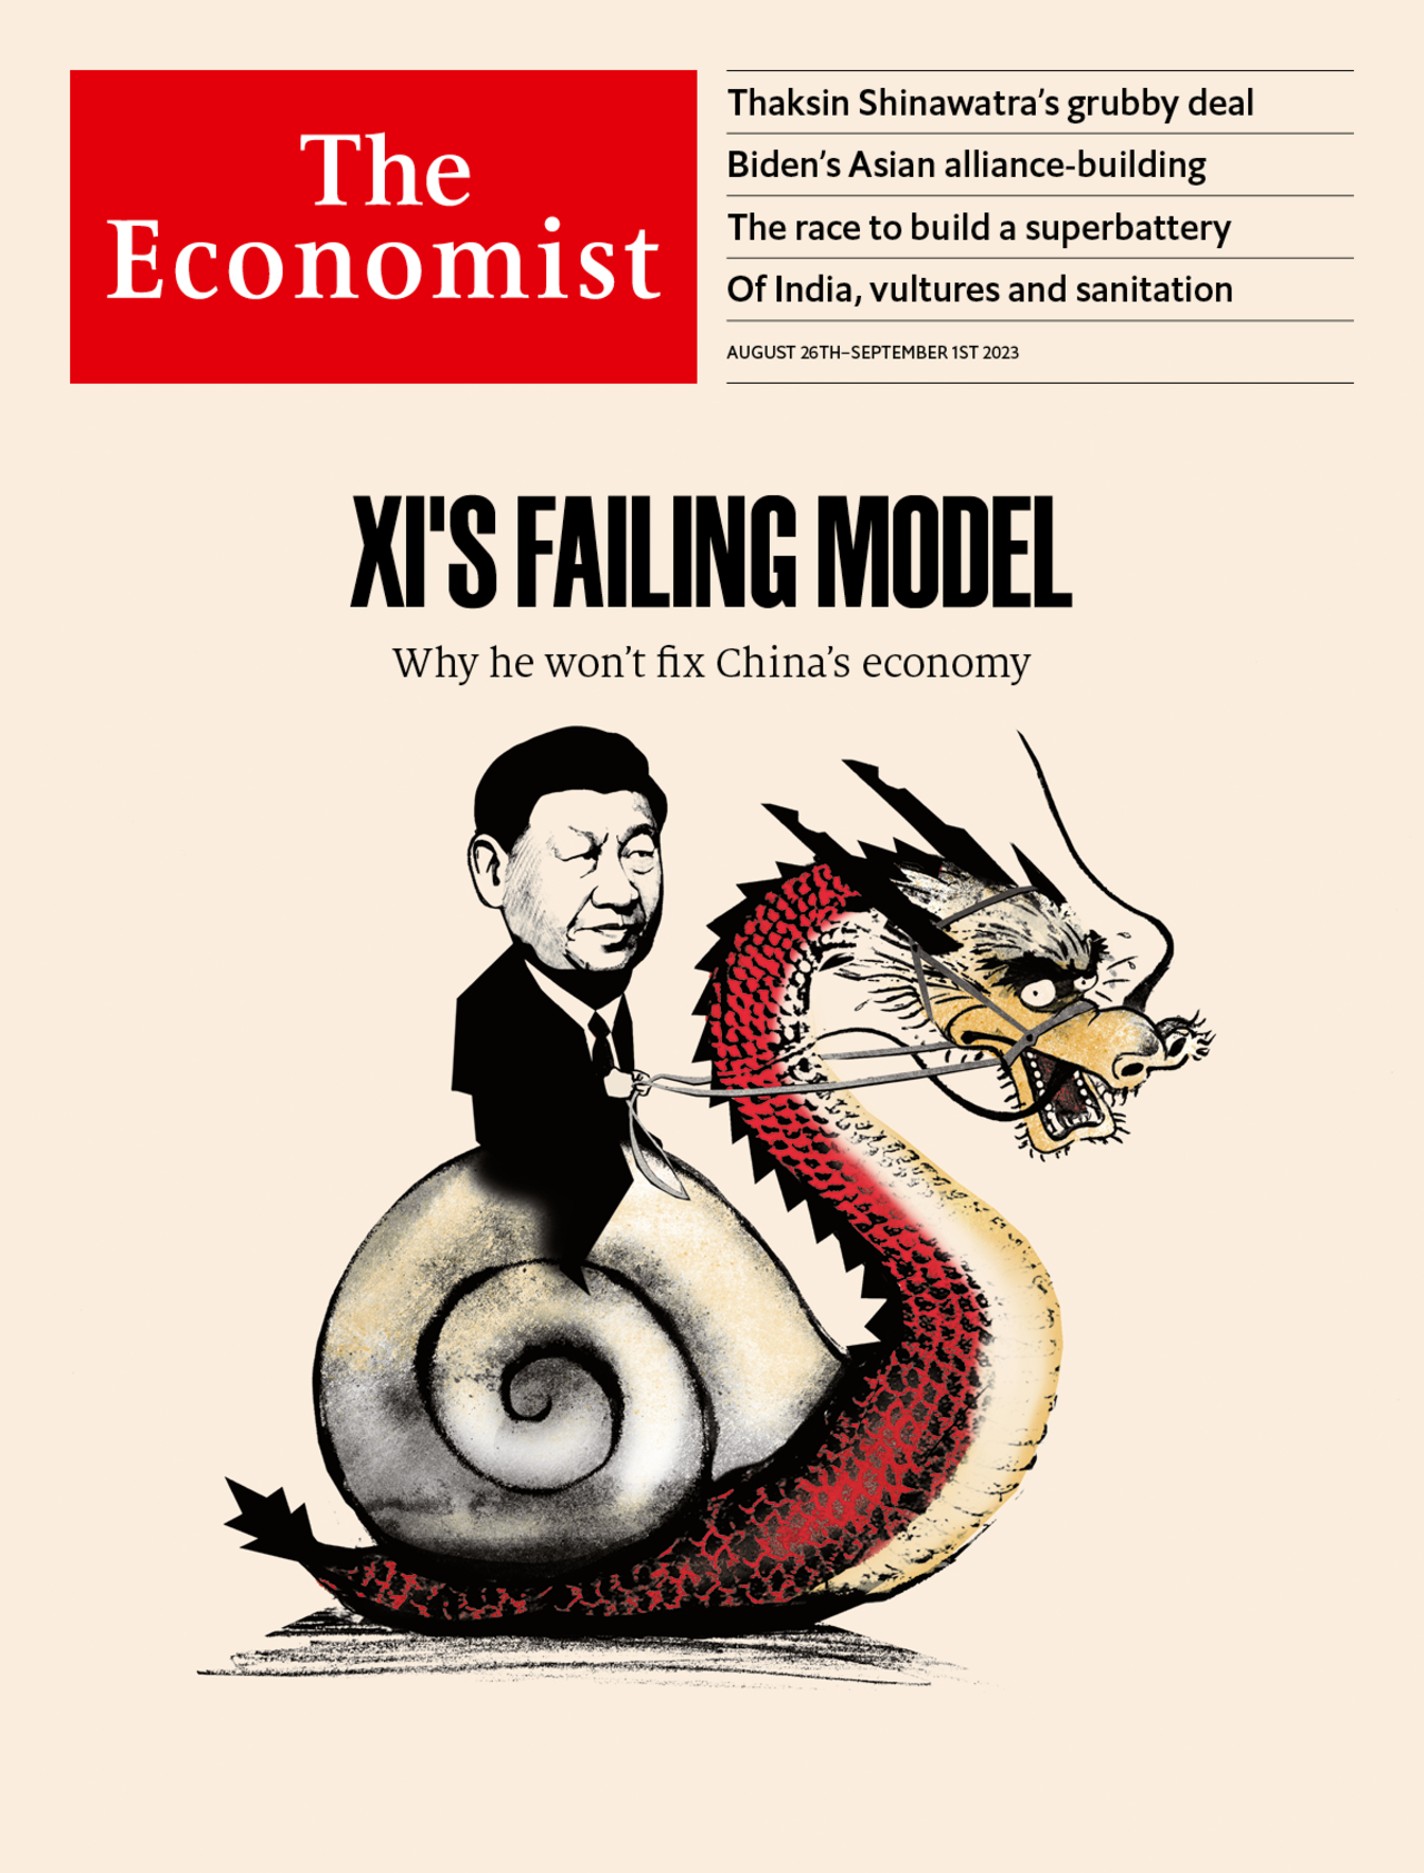 Xi’s failing model: Why he won’t fix China’s economy